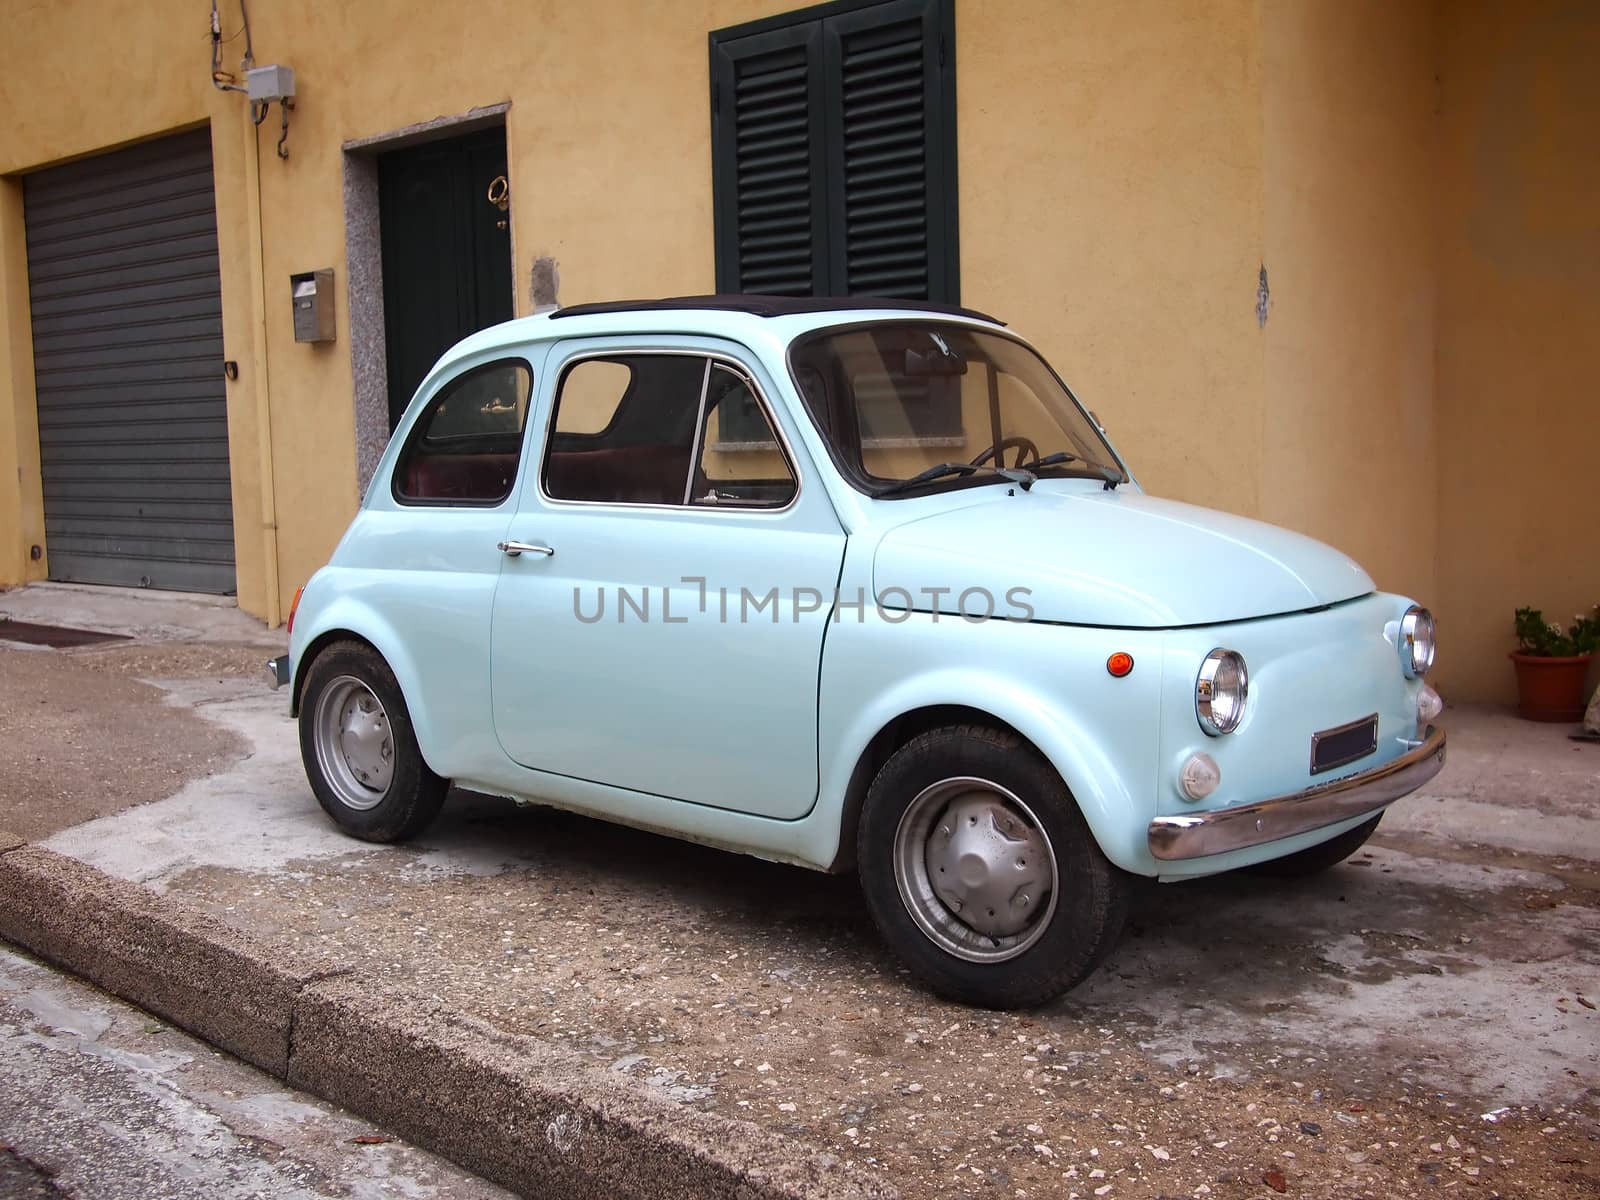 Light blue italian vintage car in Rome.